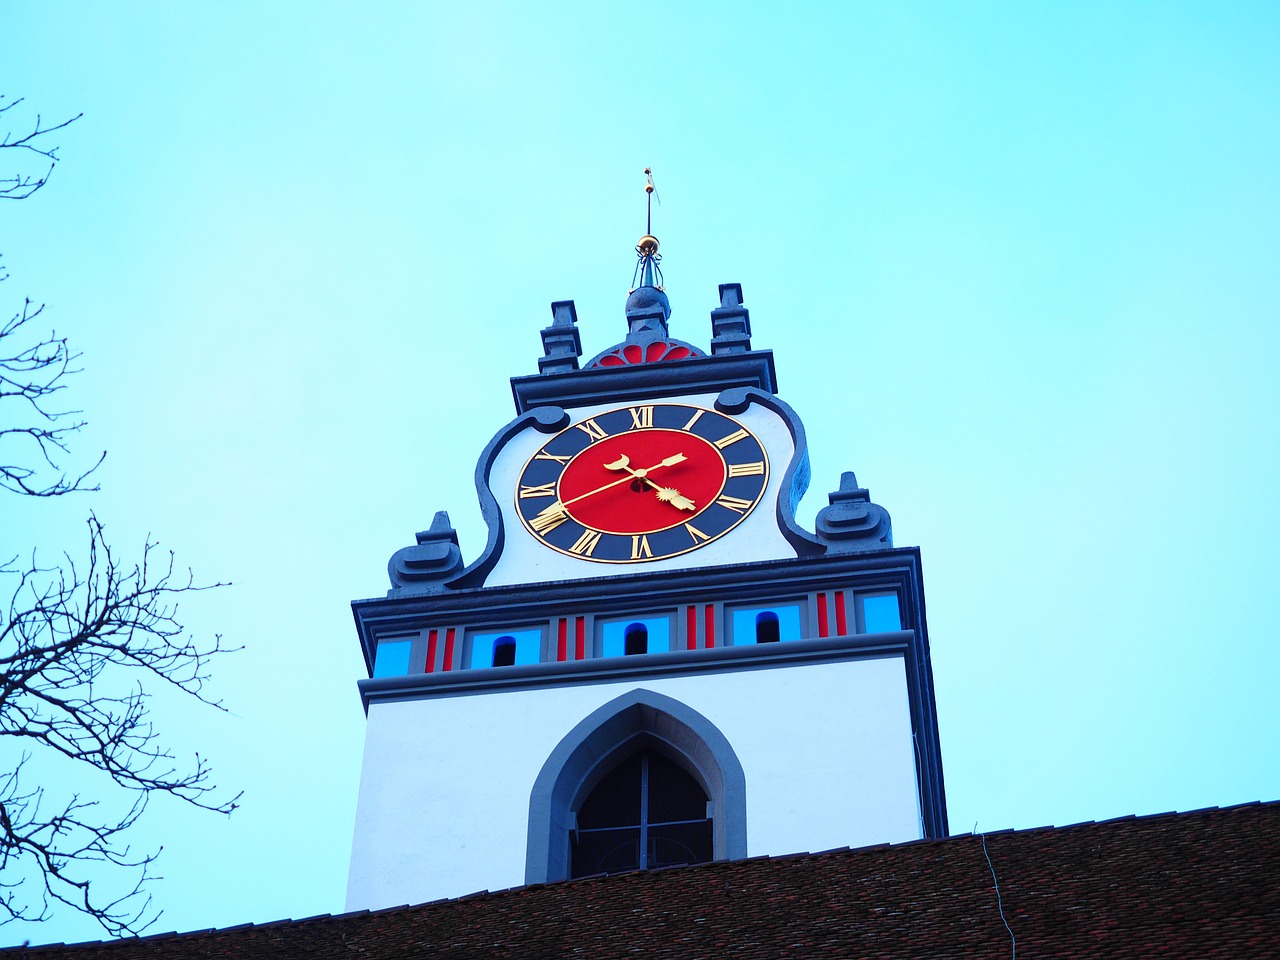 steeple church clock tower free photo